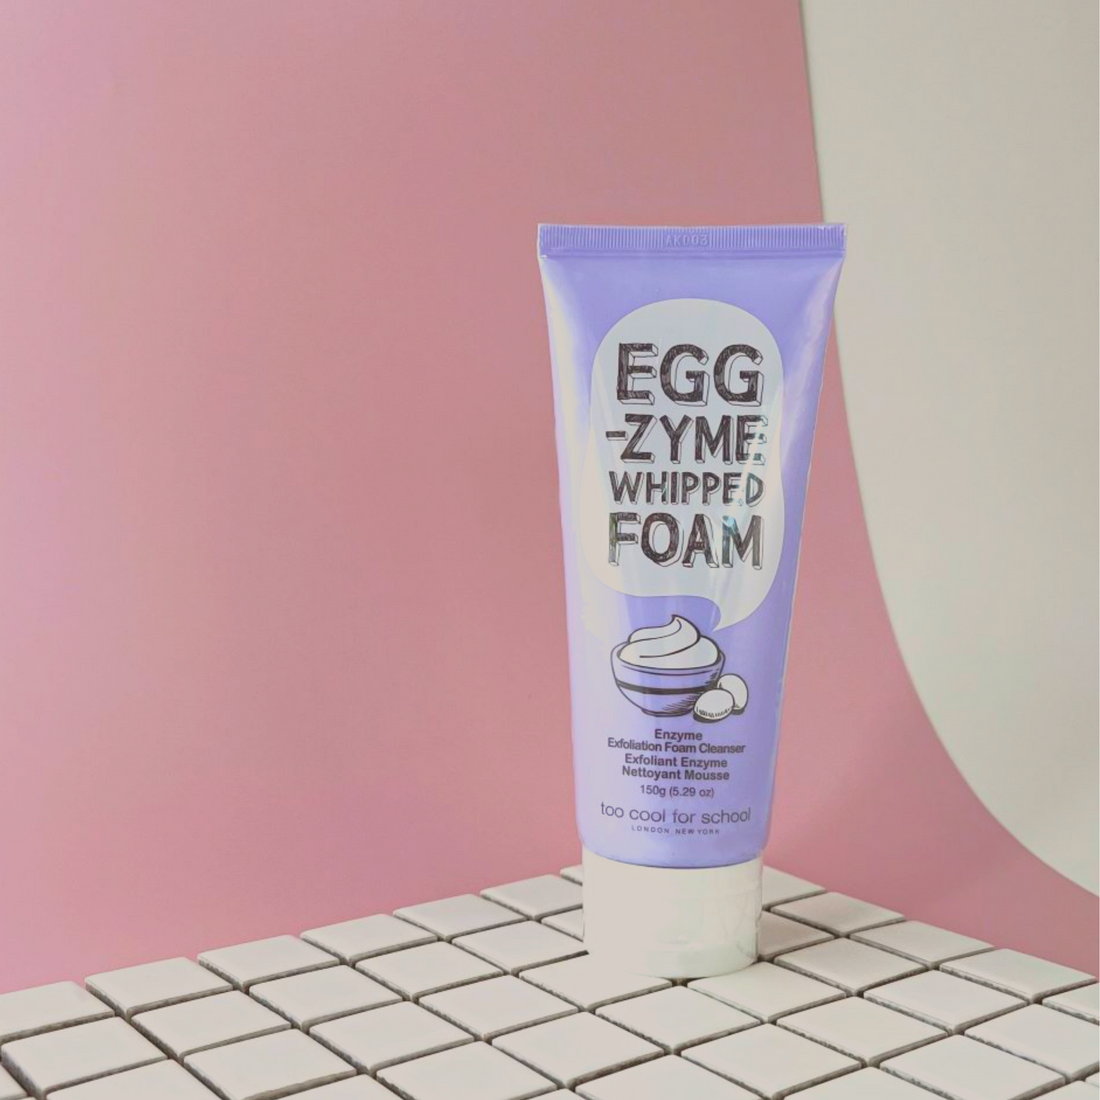 Egg-Zyme Whipped Foam